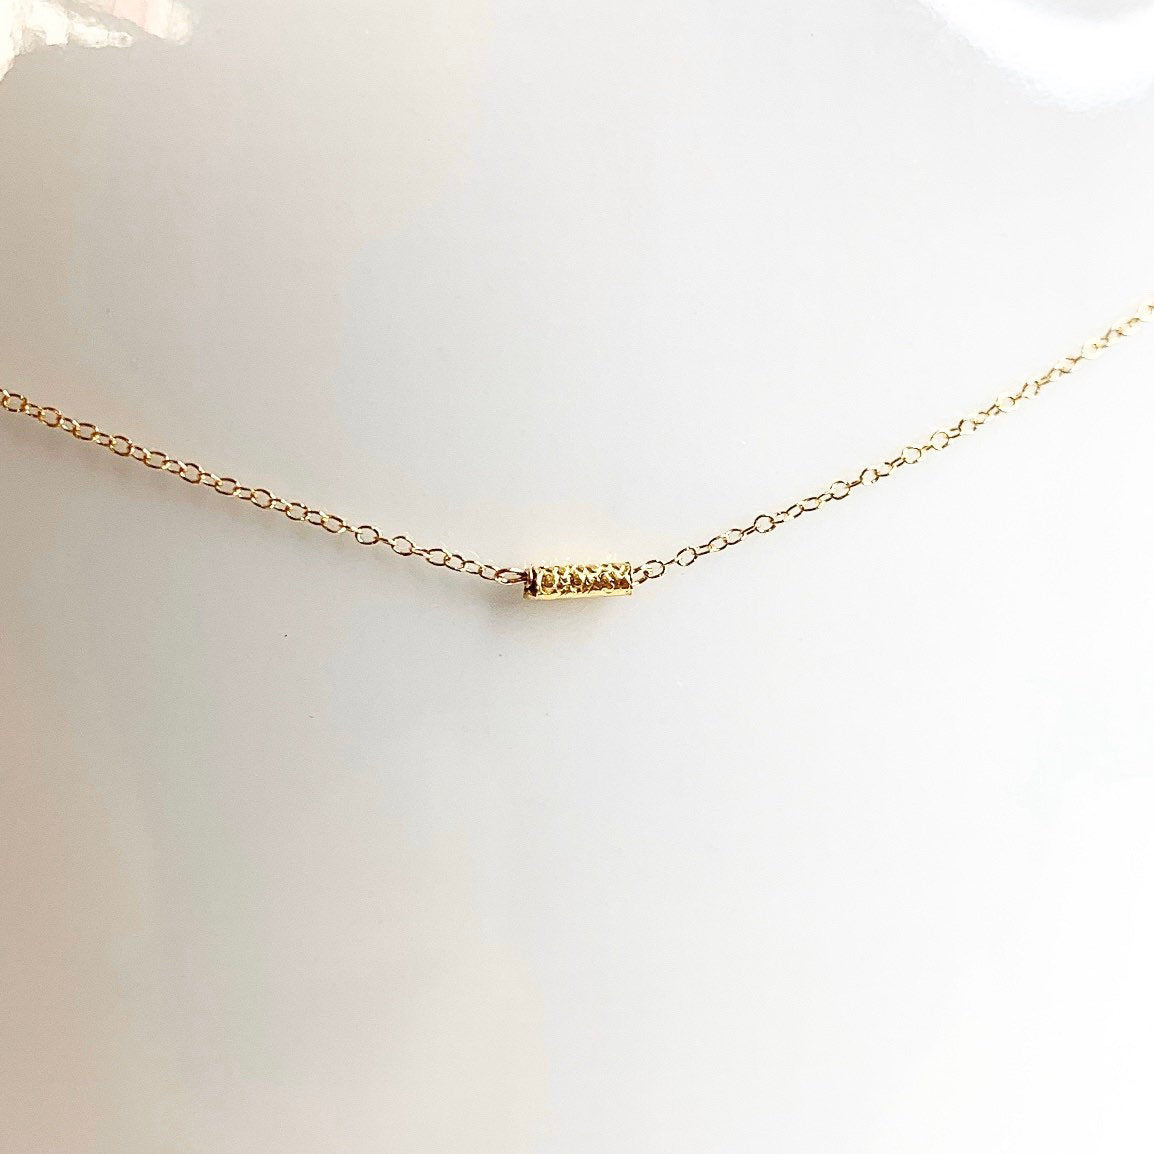 14k Gold Chain Necklace w/ 18k Gold Pendant